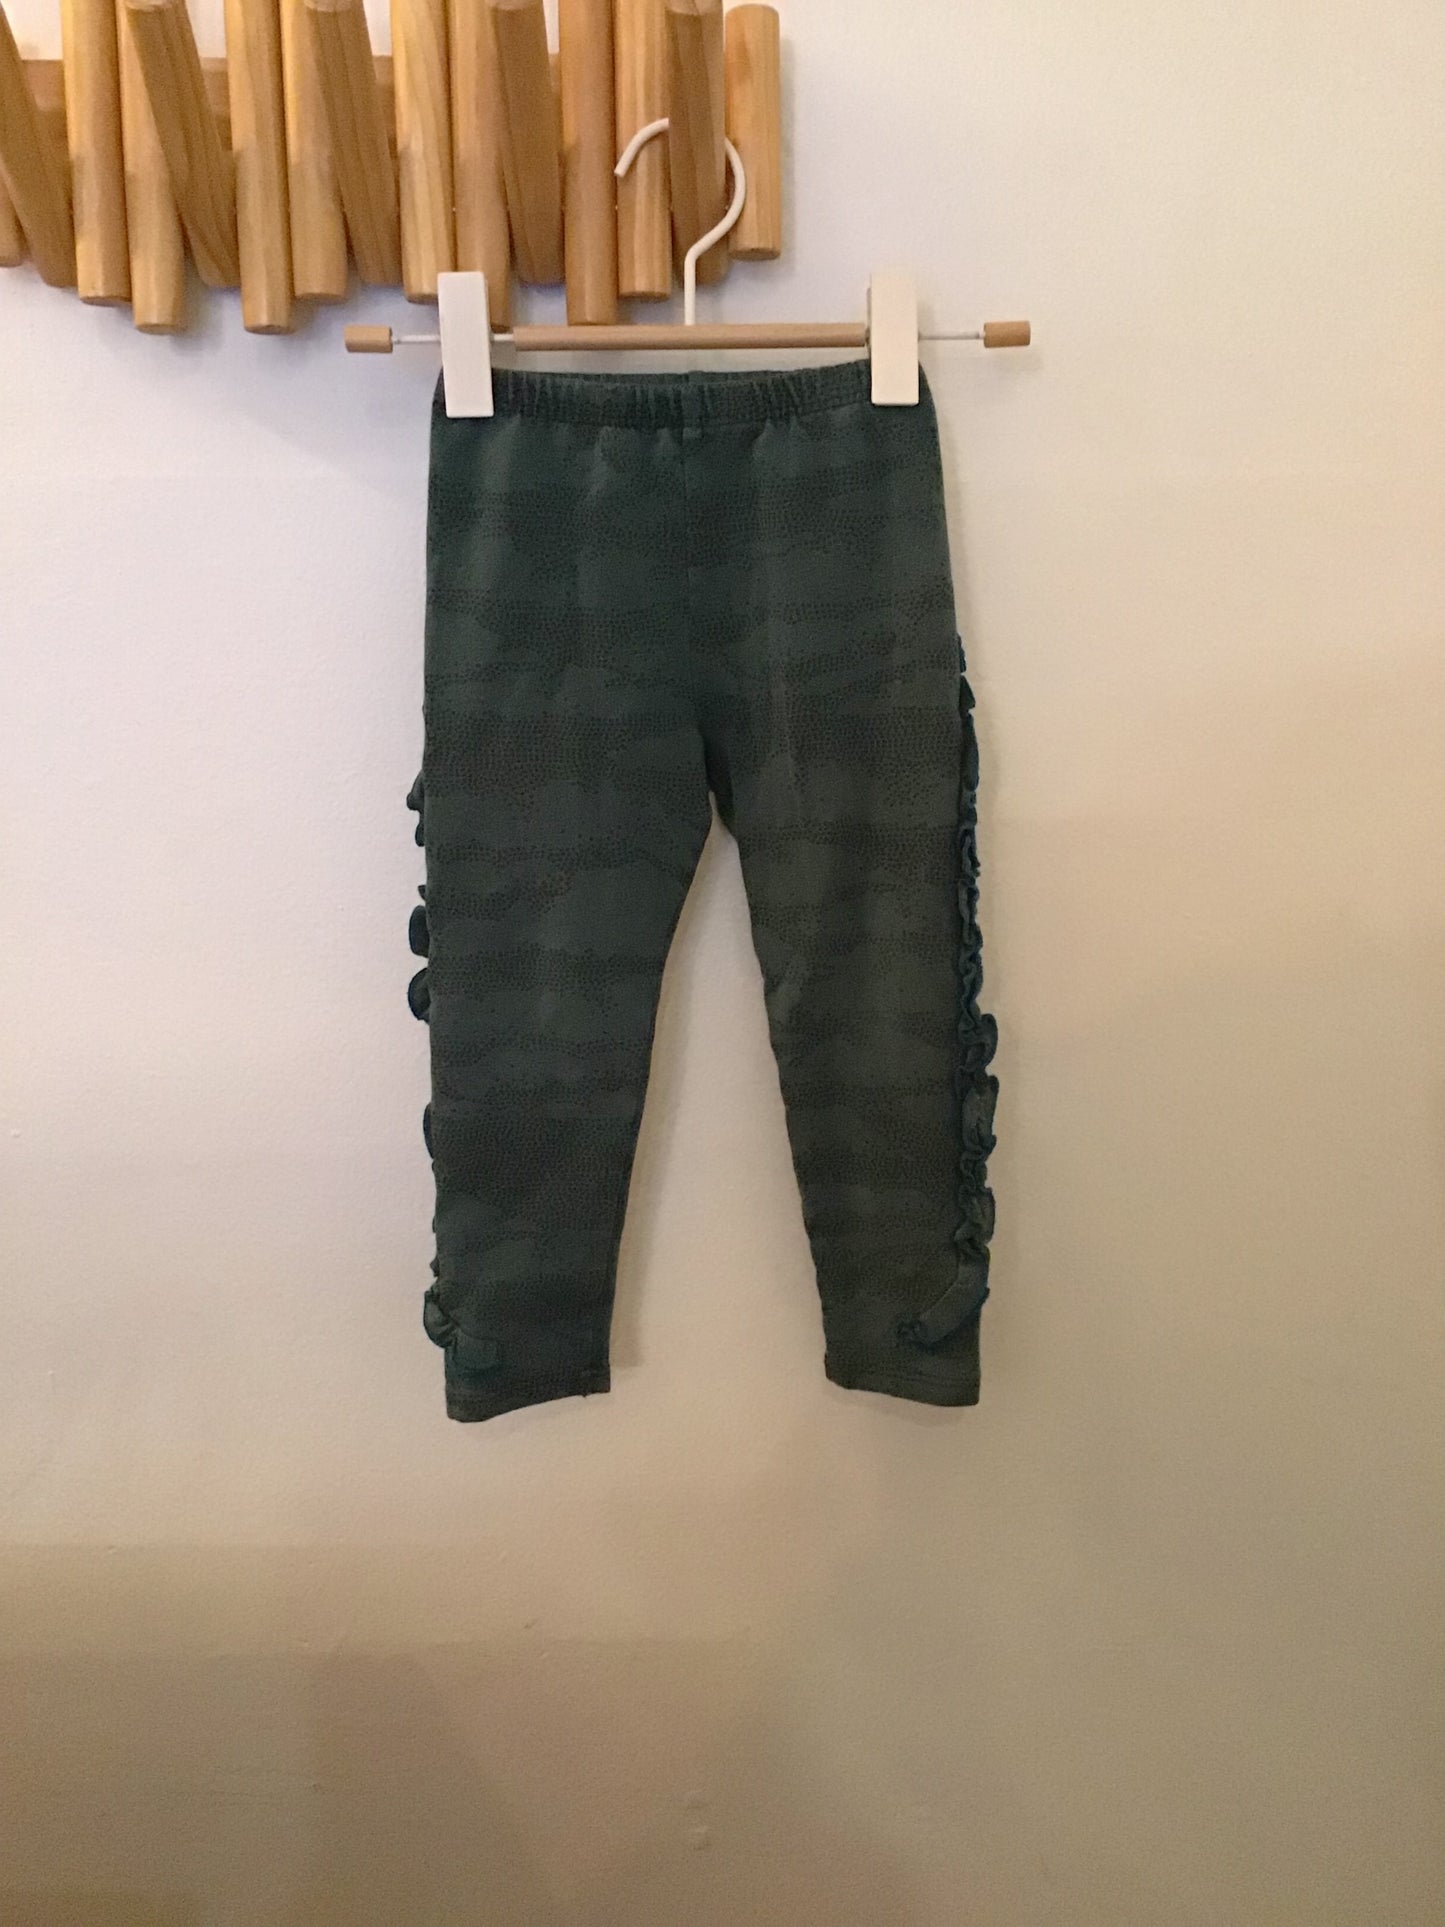 Frilly green print leggings 4y